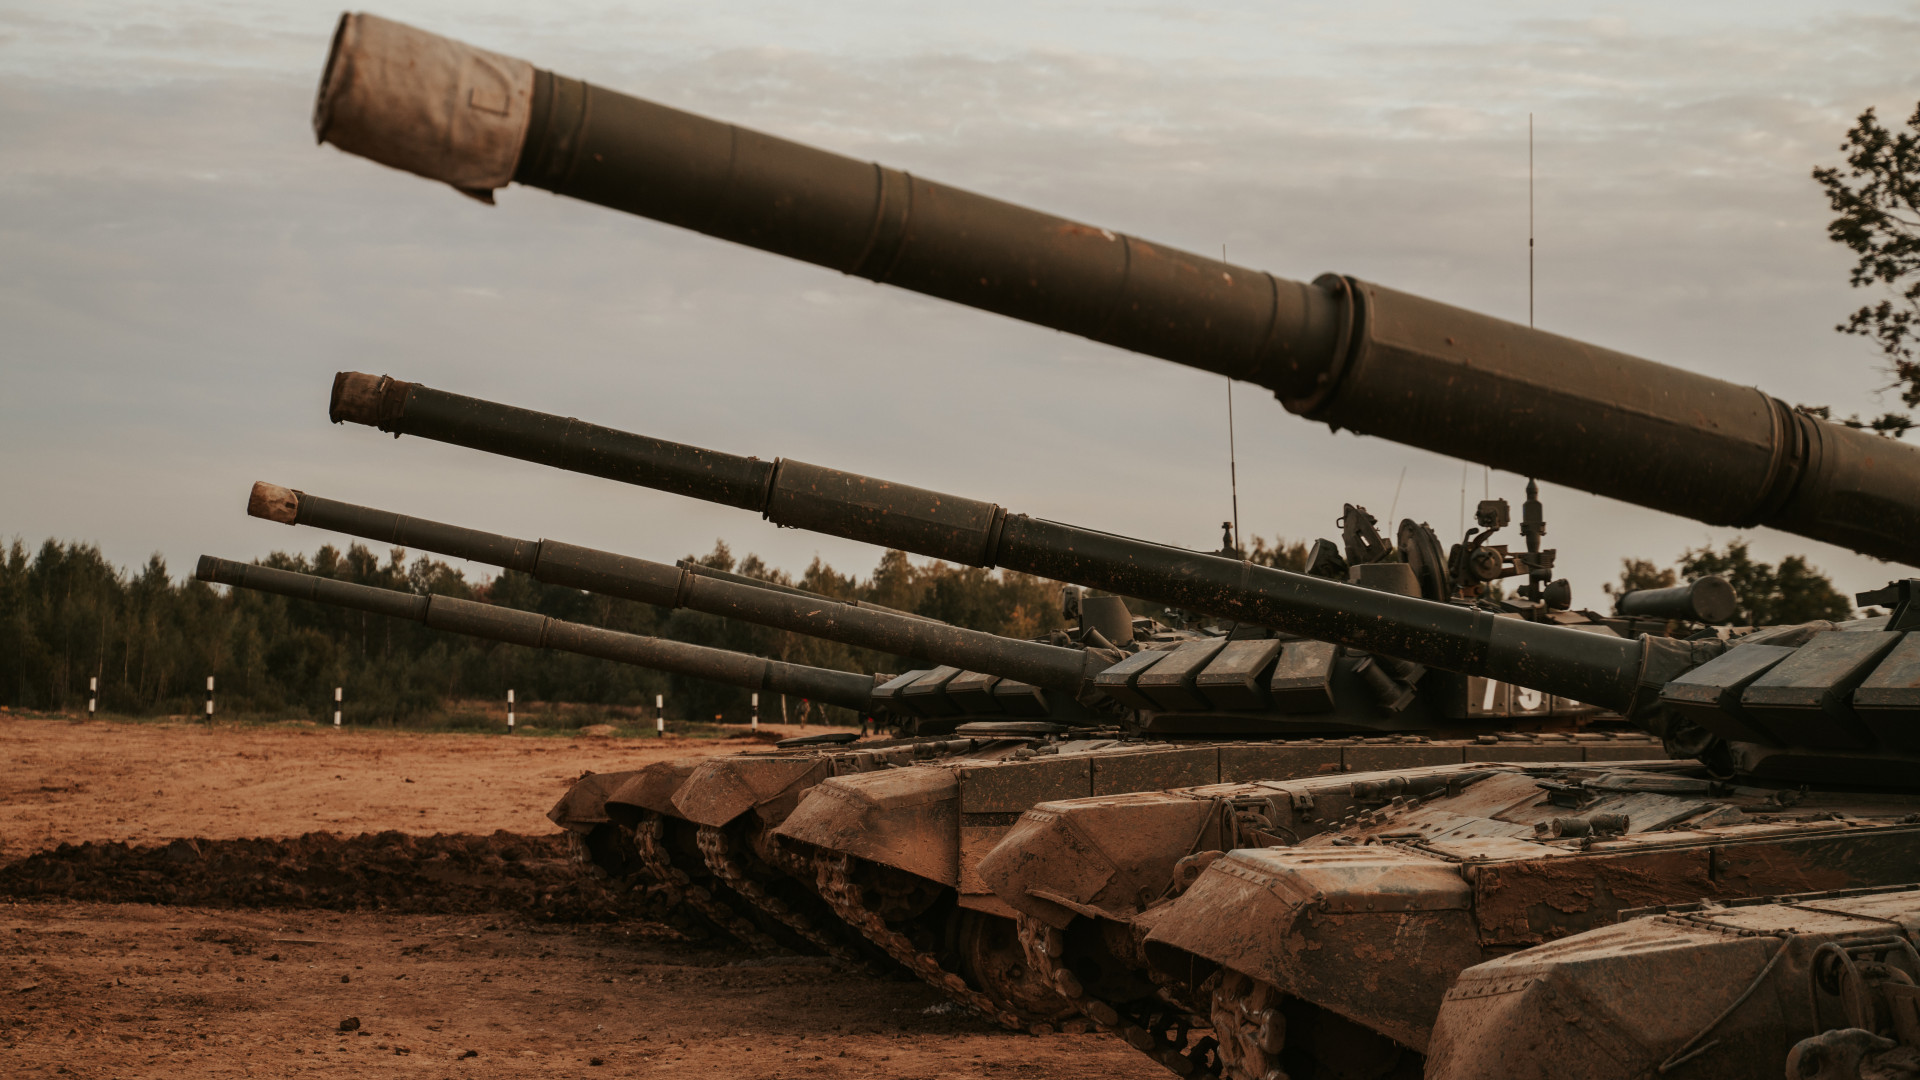 orosz ukran haboru tank harckocsi harcjarmu orosz tank ukrajna hadsereg hadero 542635